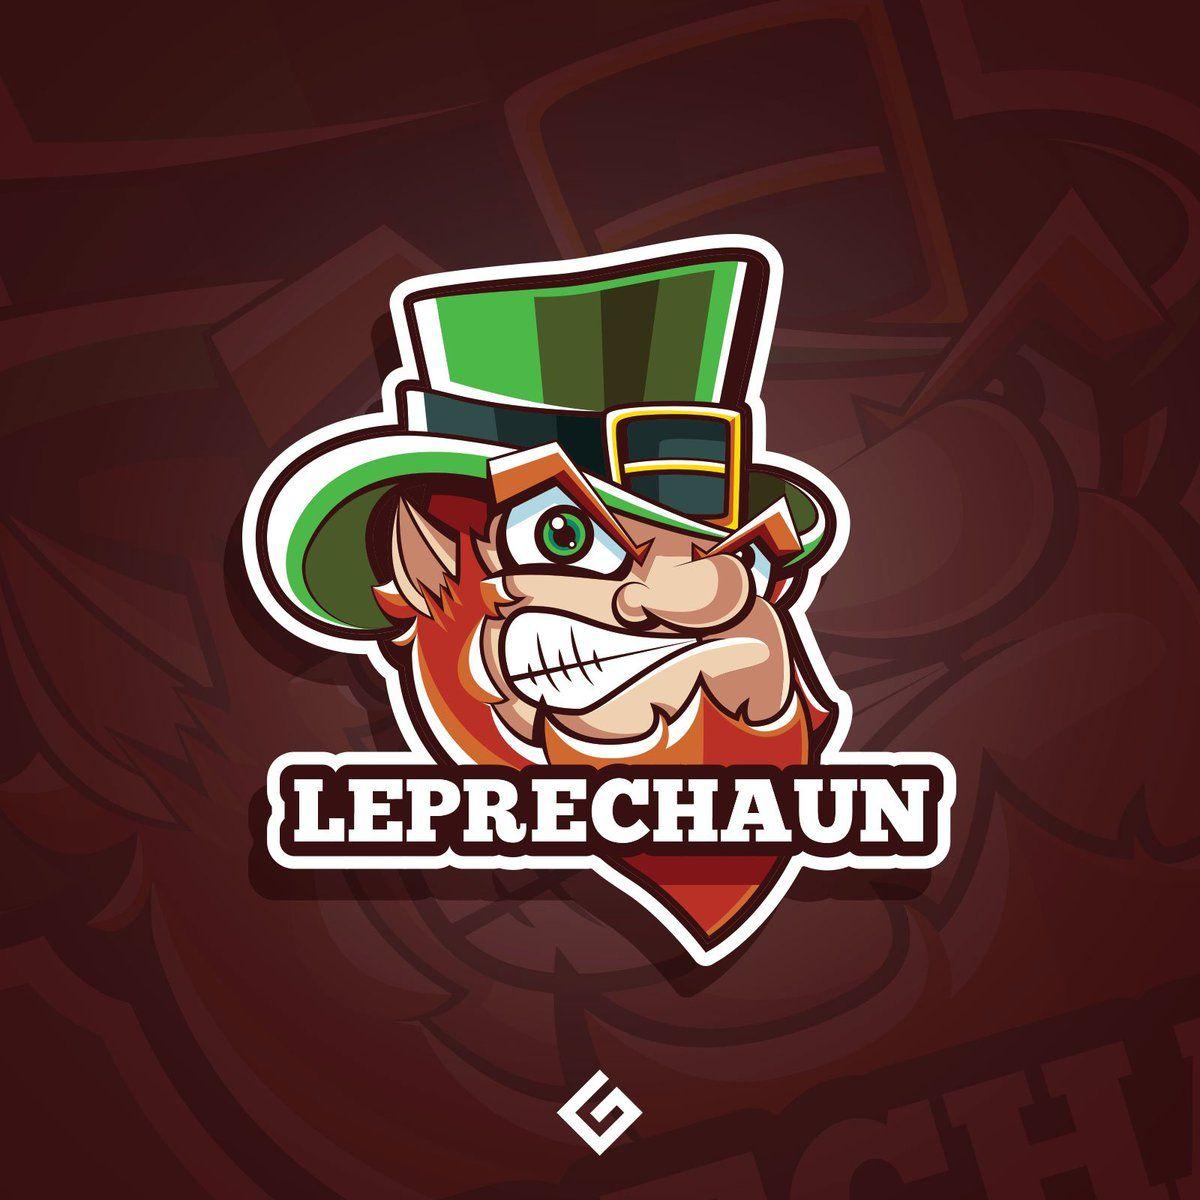 Leprechaun Logo - GamerGFX. Patrick's Day may be over but we hit